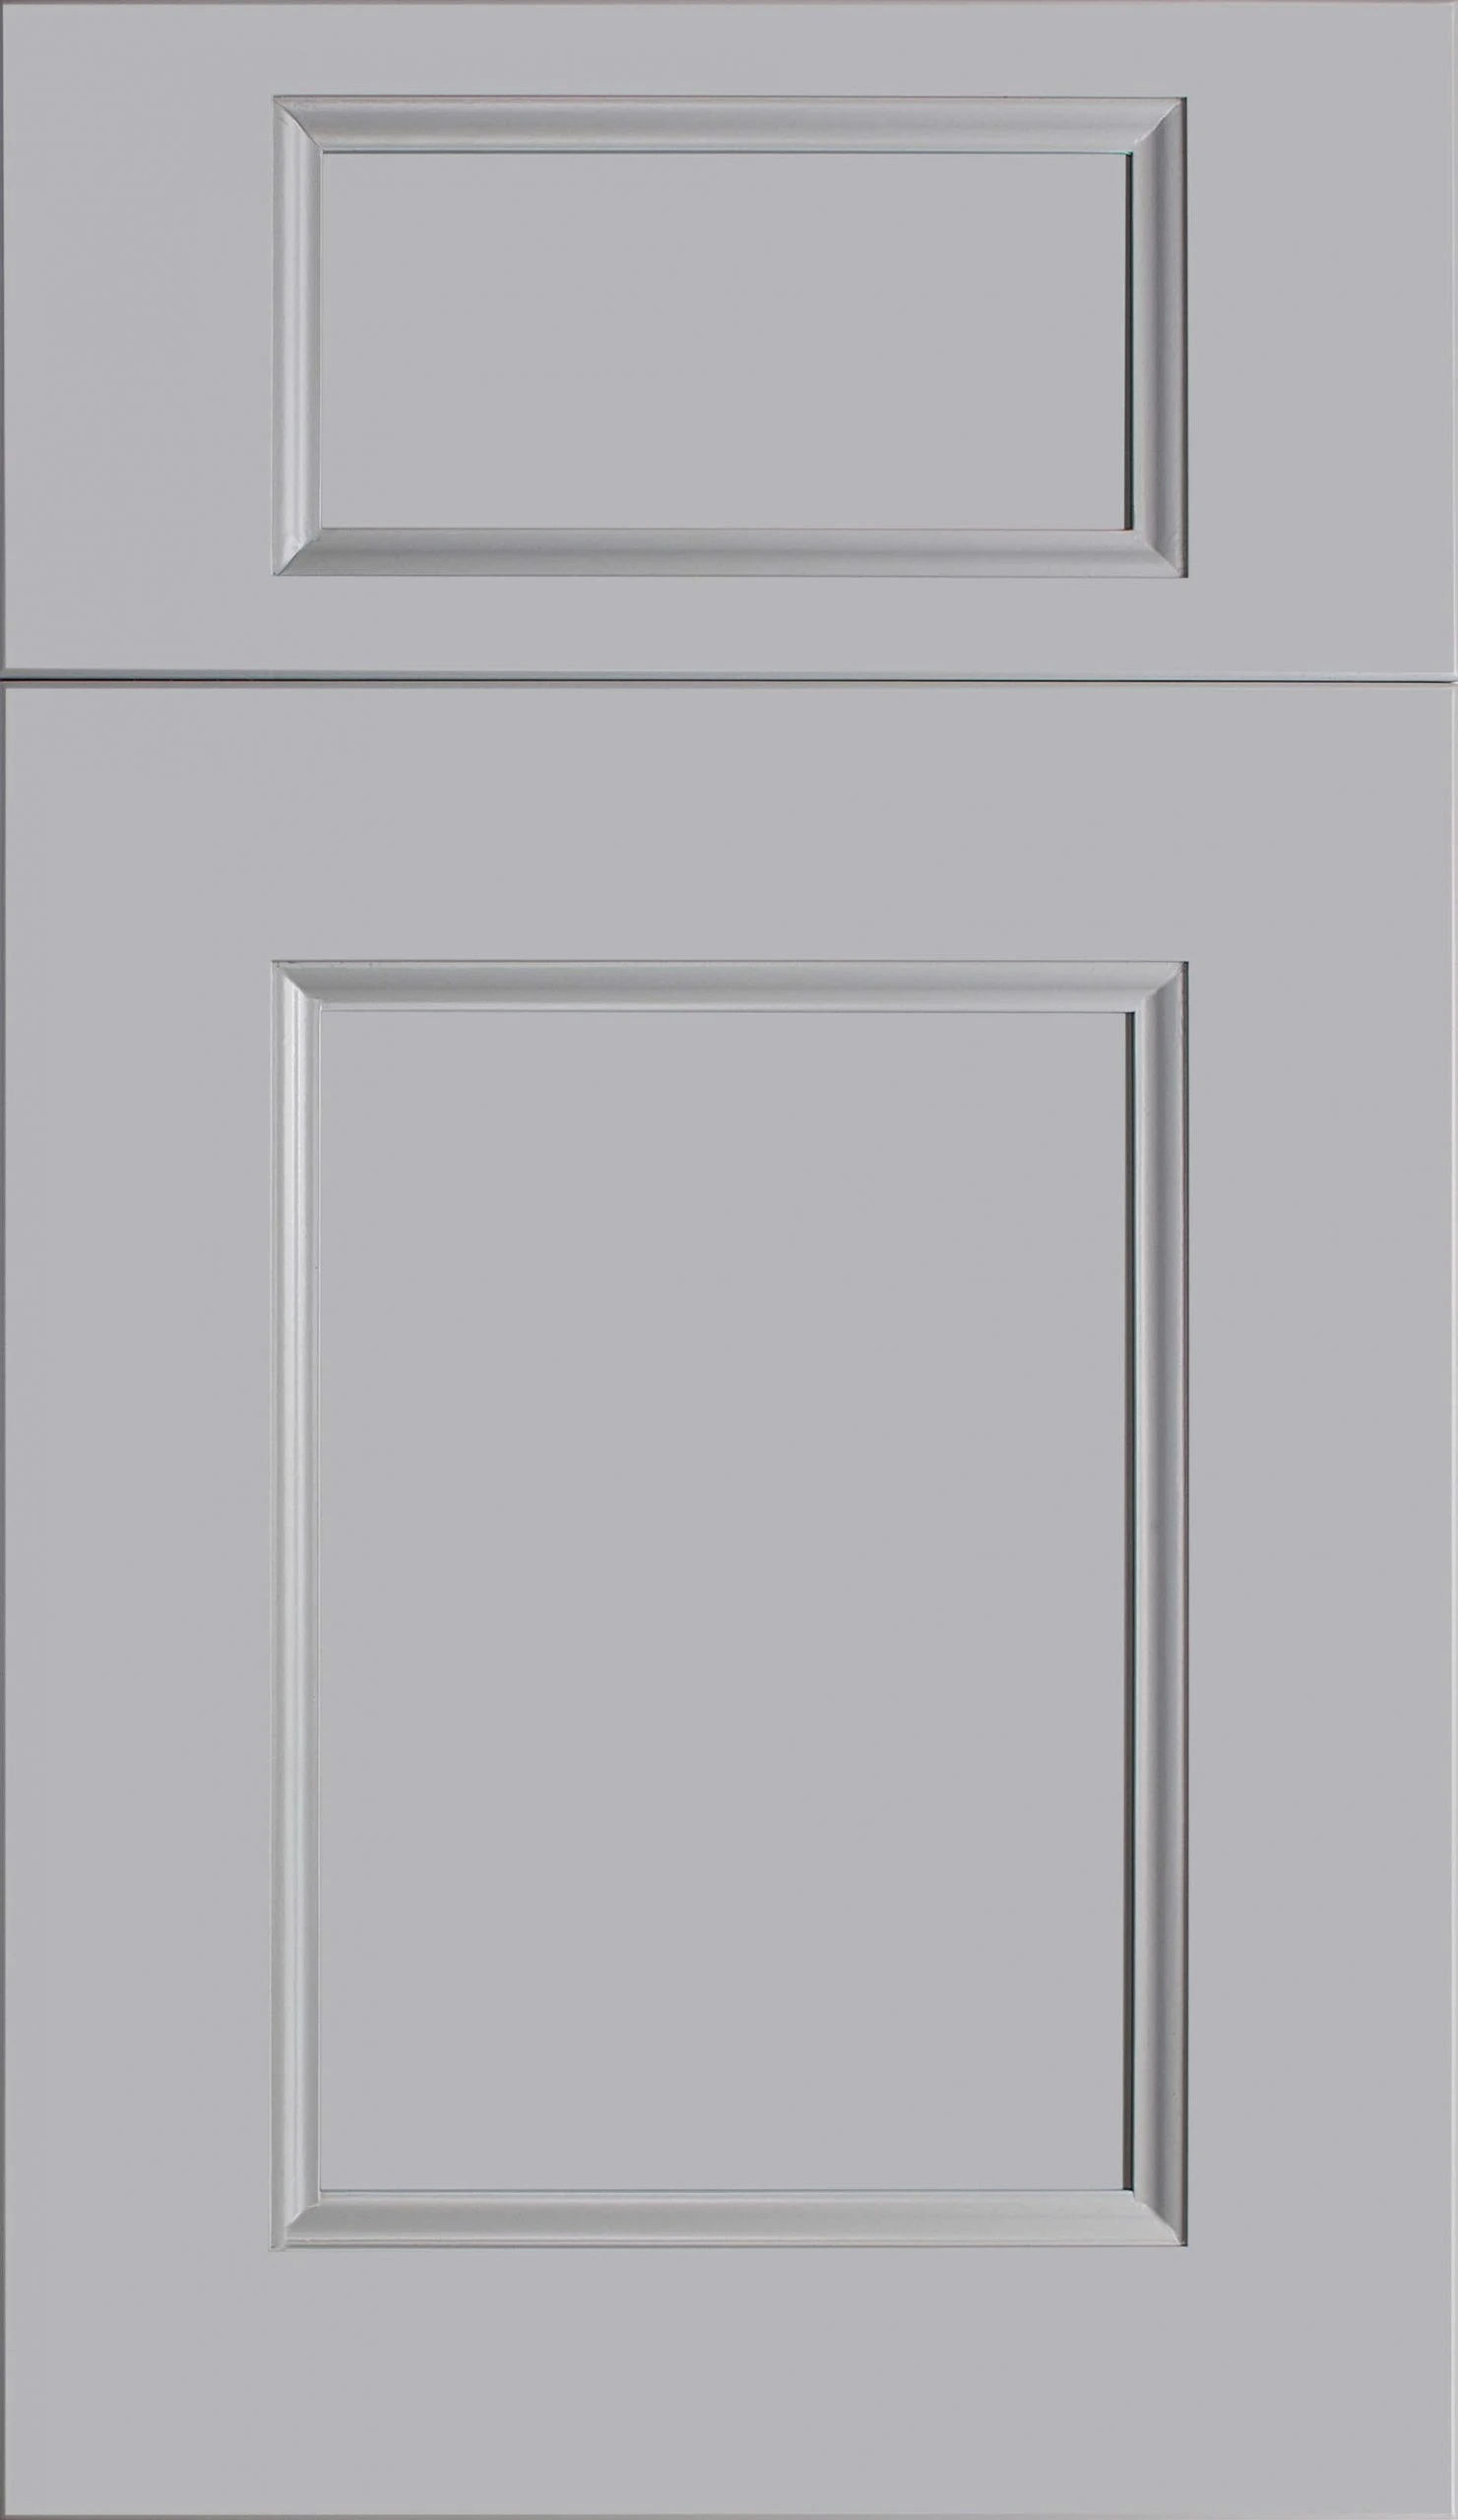 Fabuwood Nexus Slate grey color cabinets Door